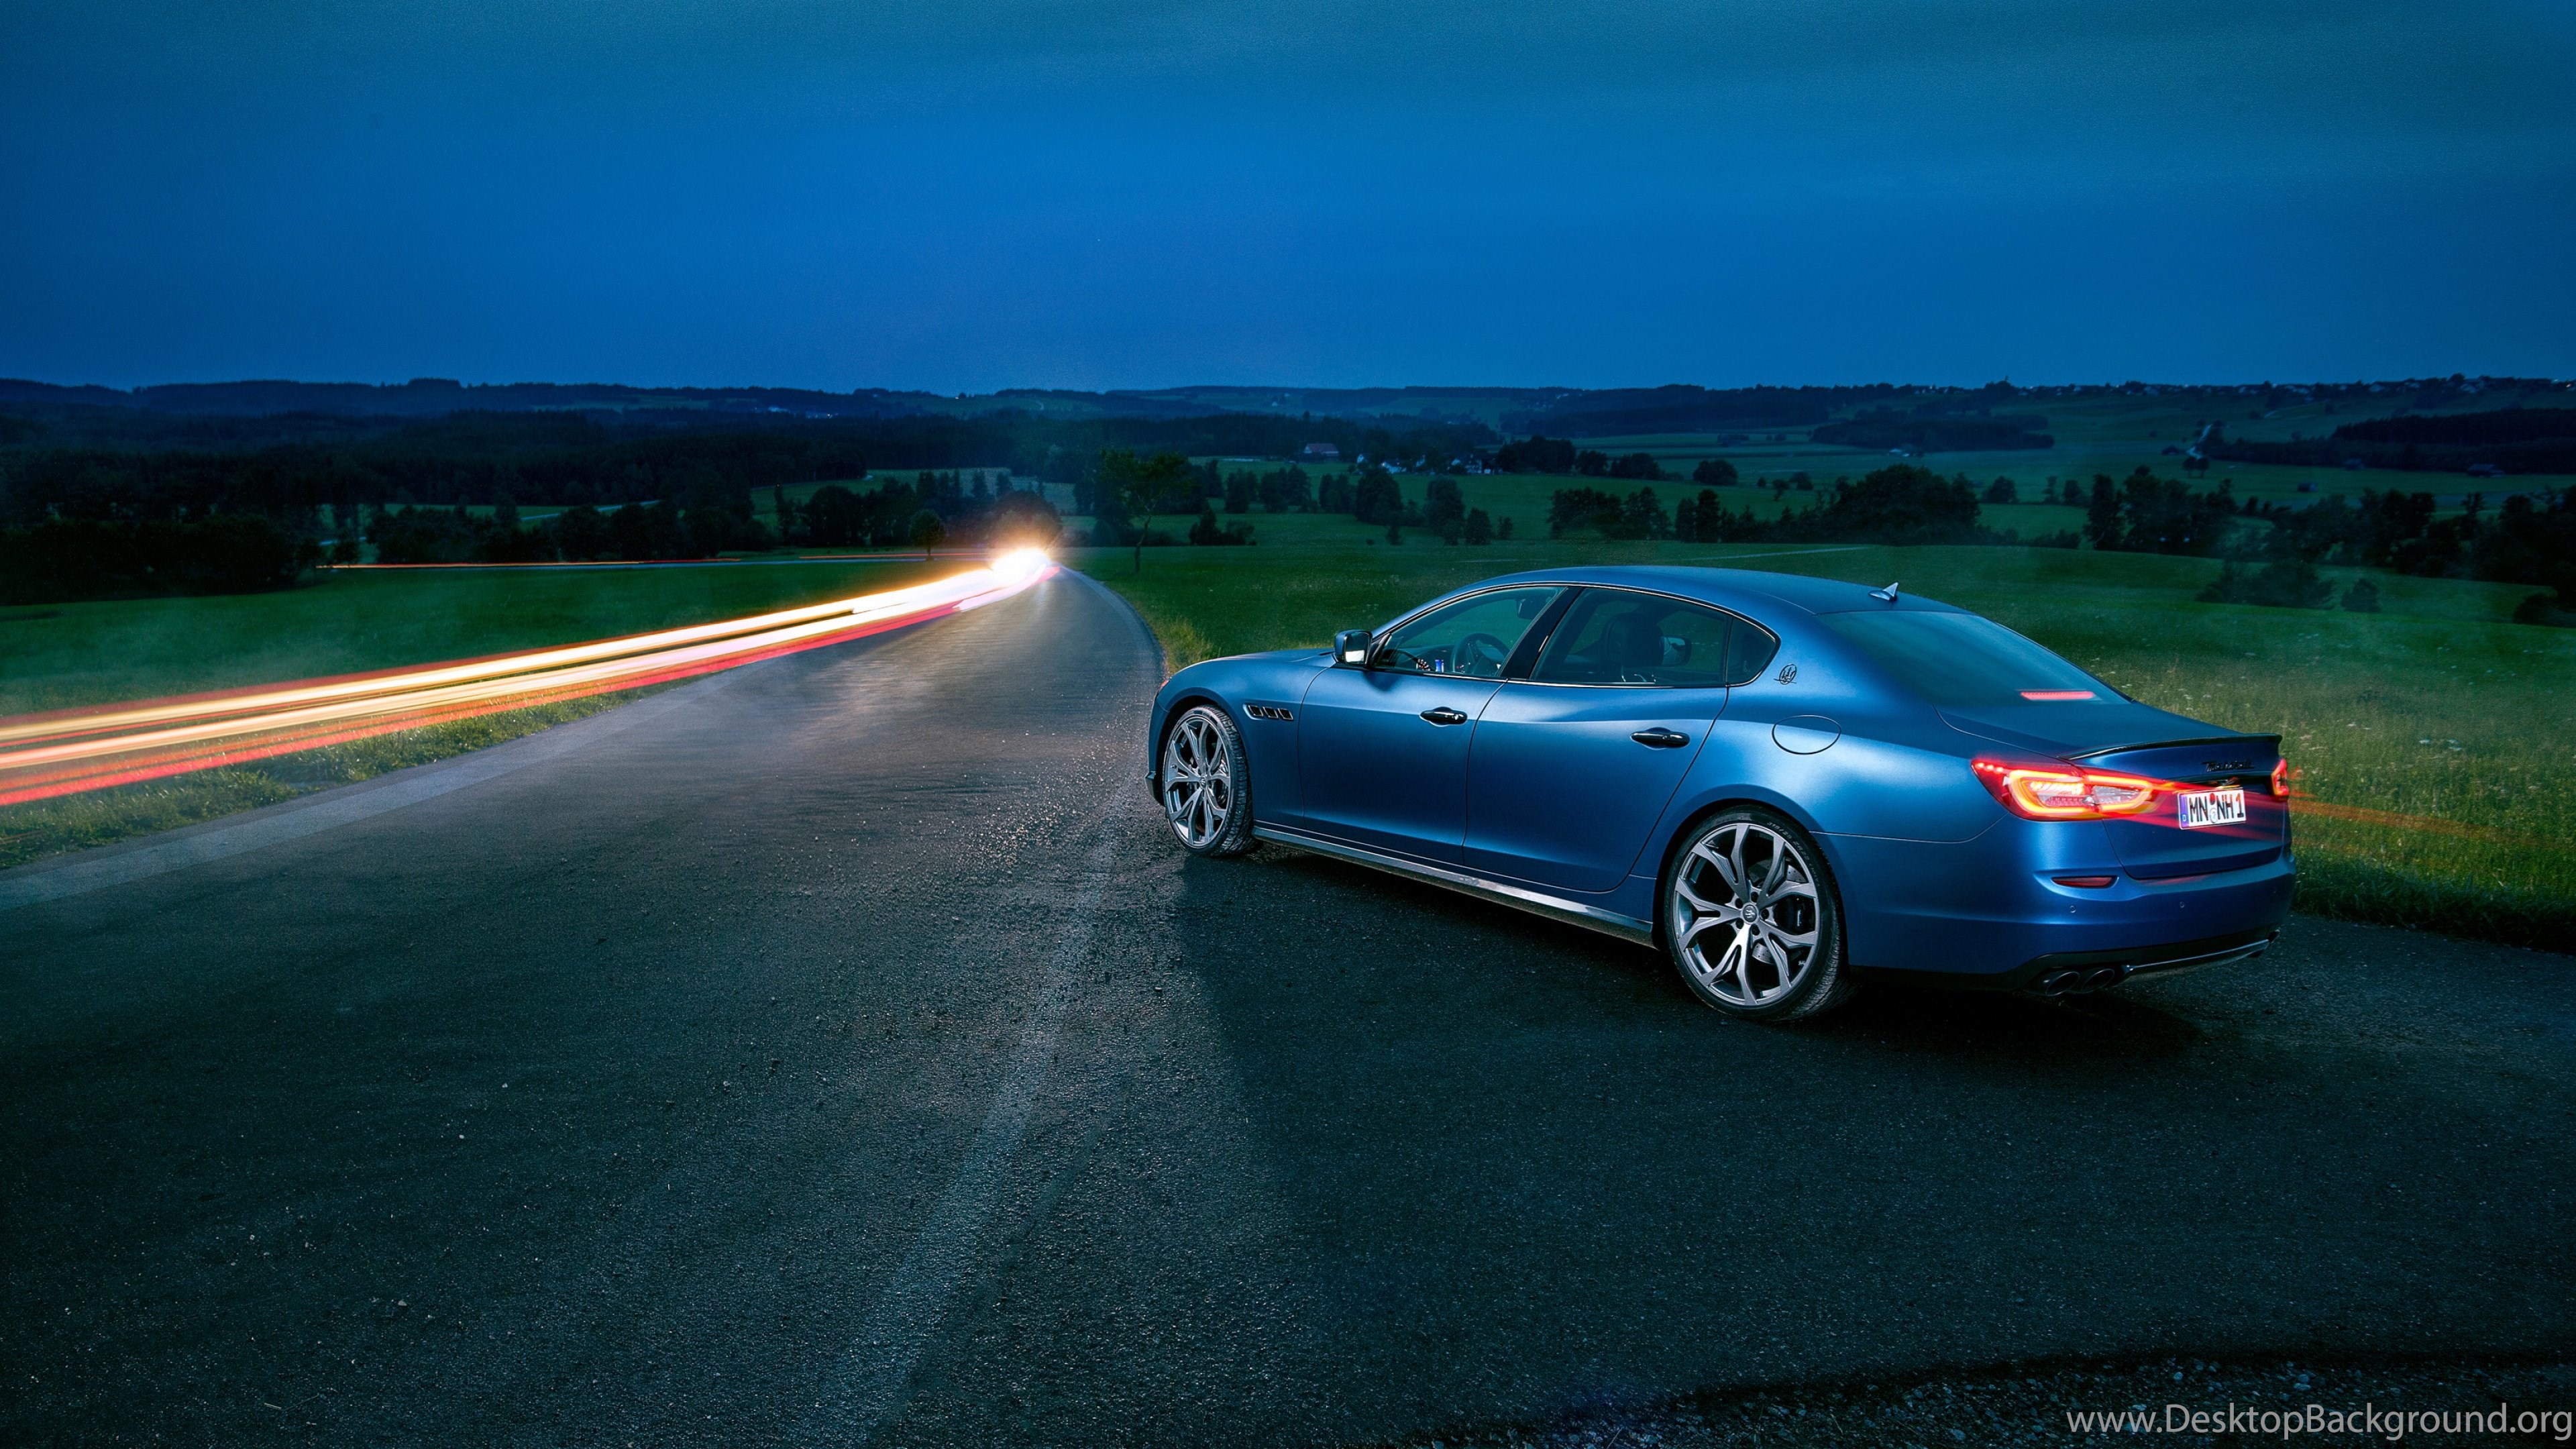 Автомобиль ночью на дороге. Maserati Quattroporte синий. Maserati Quattroporte обои. Машина ночью. Машина на дороге.